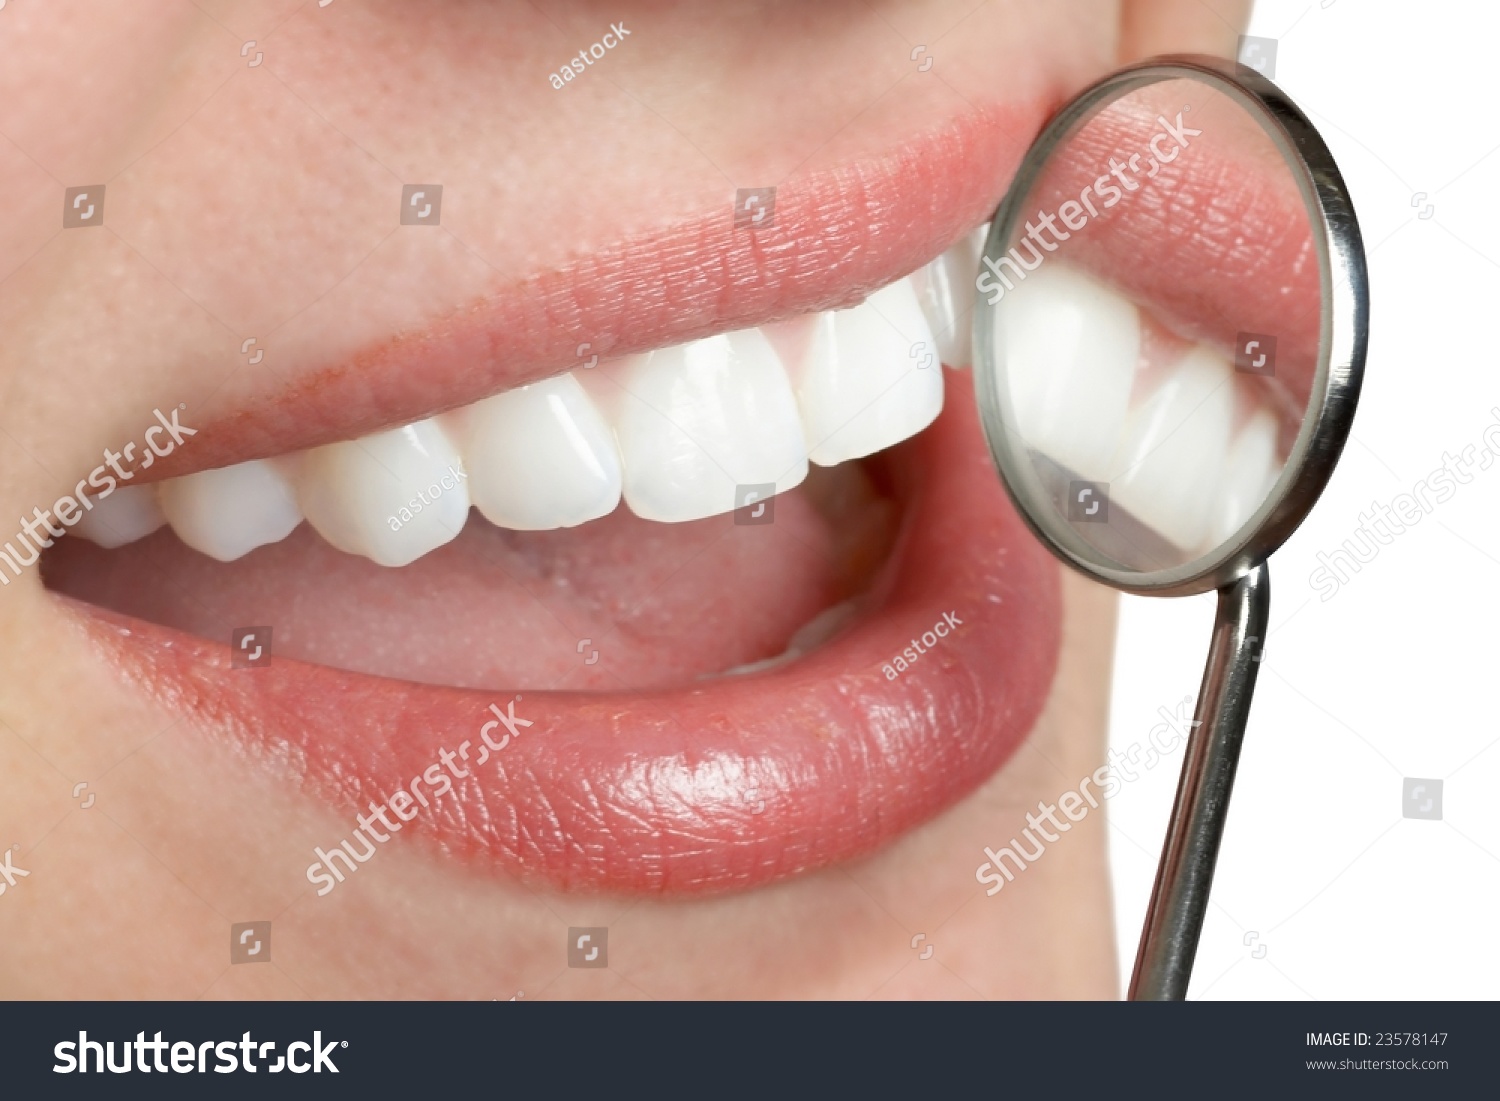 Smiling White Teeth Mouth With Dental Mirror Stock Photo 23578147 